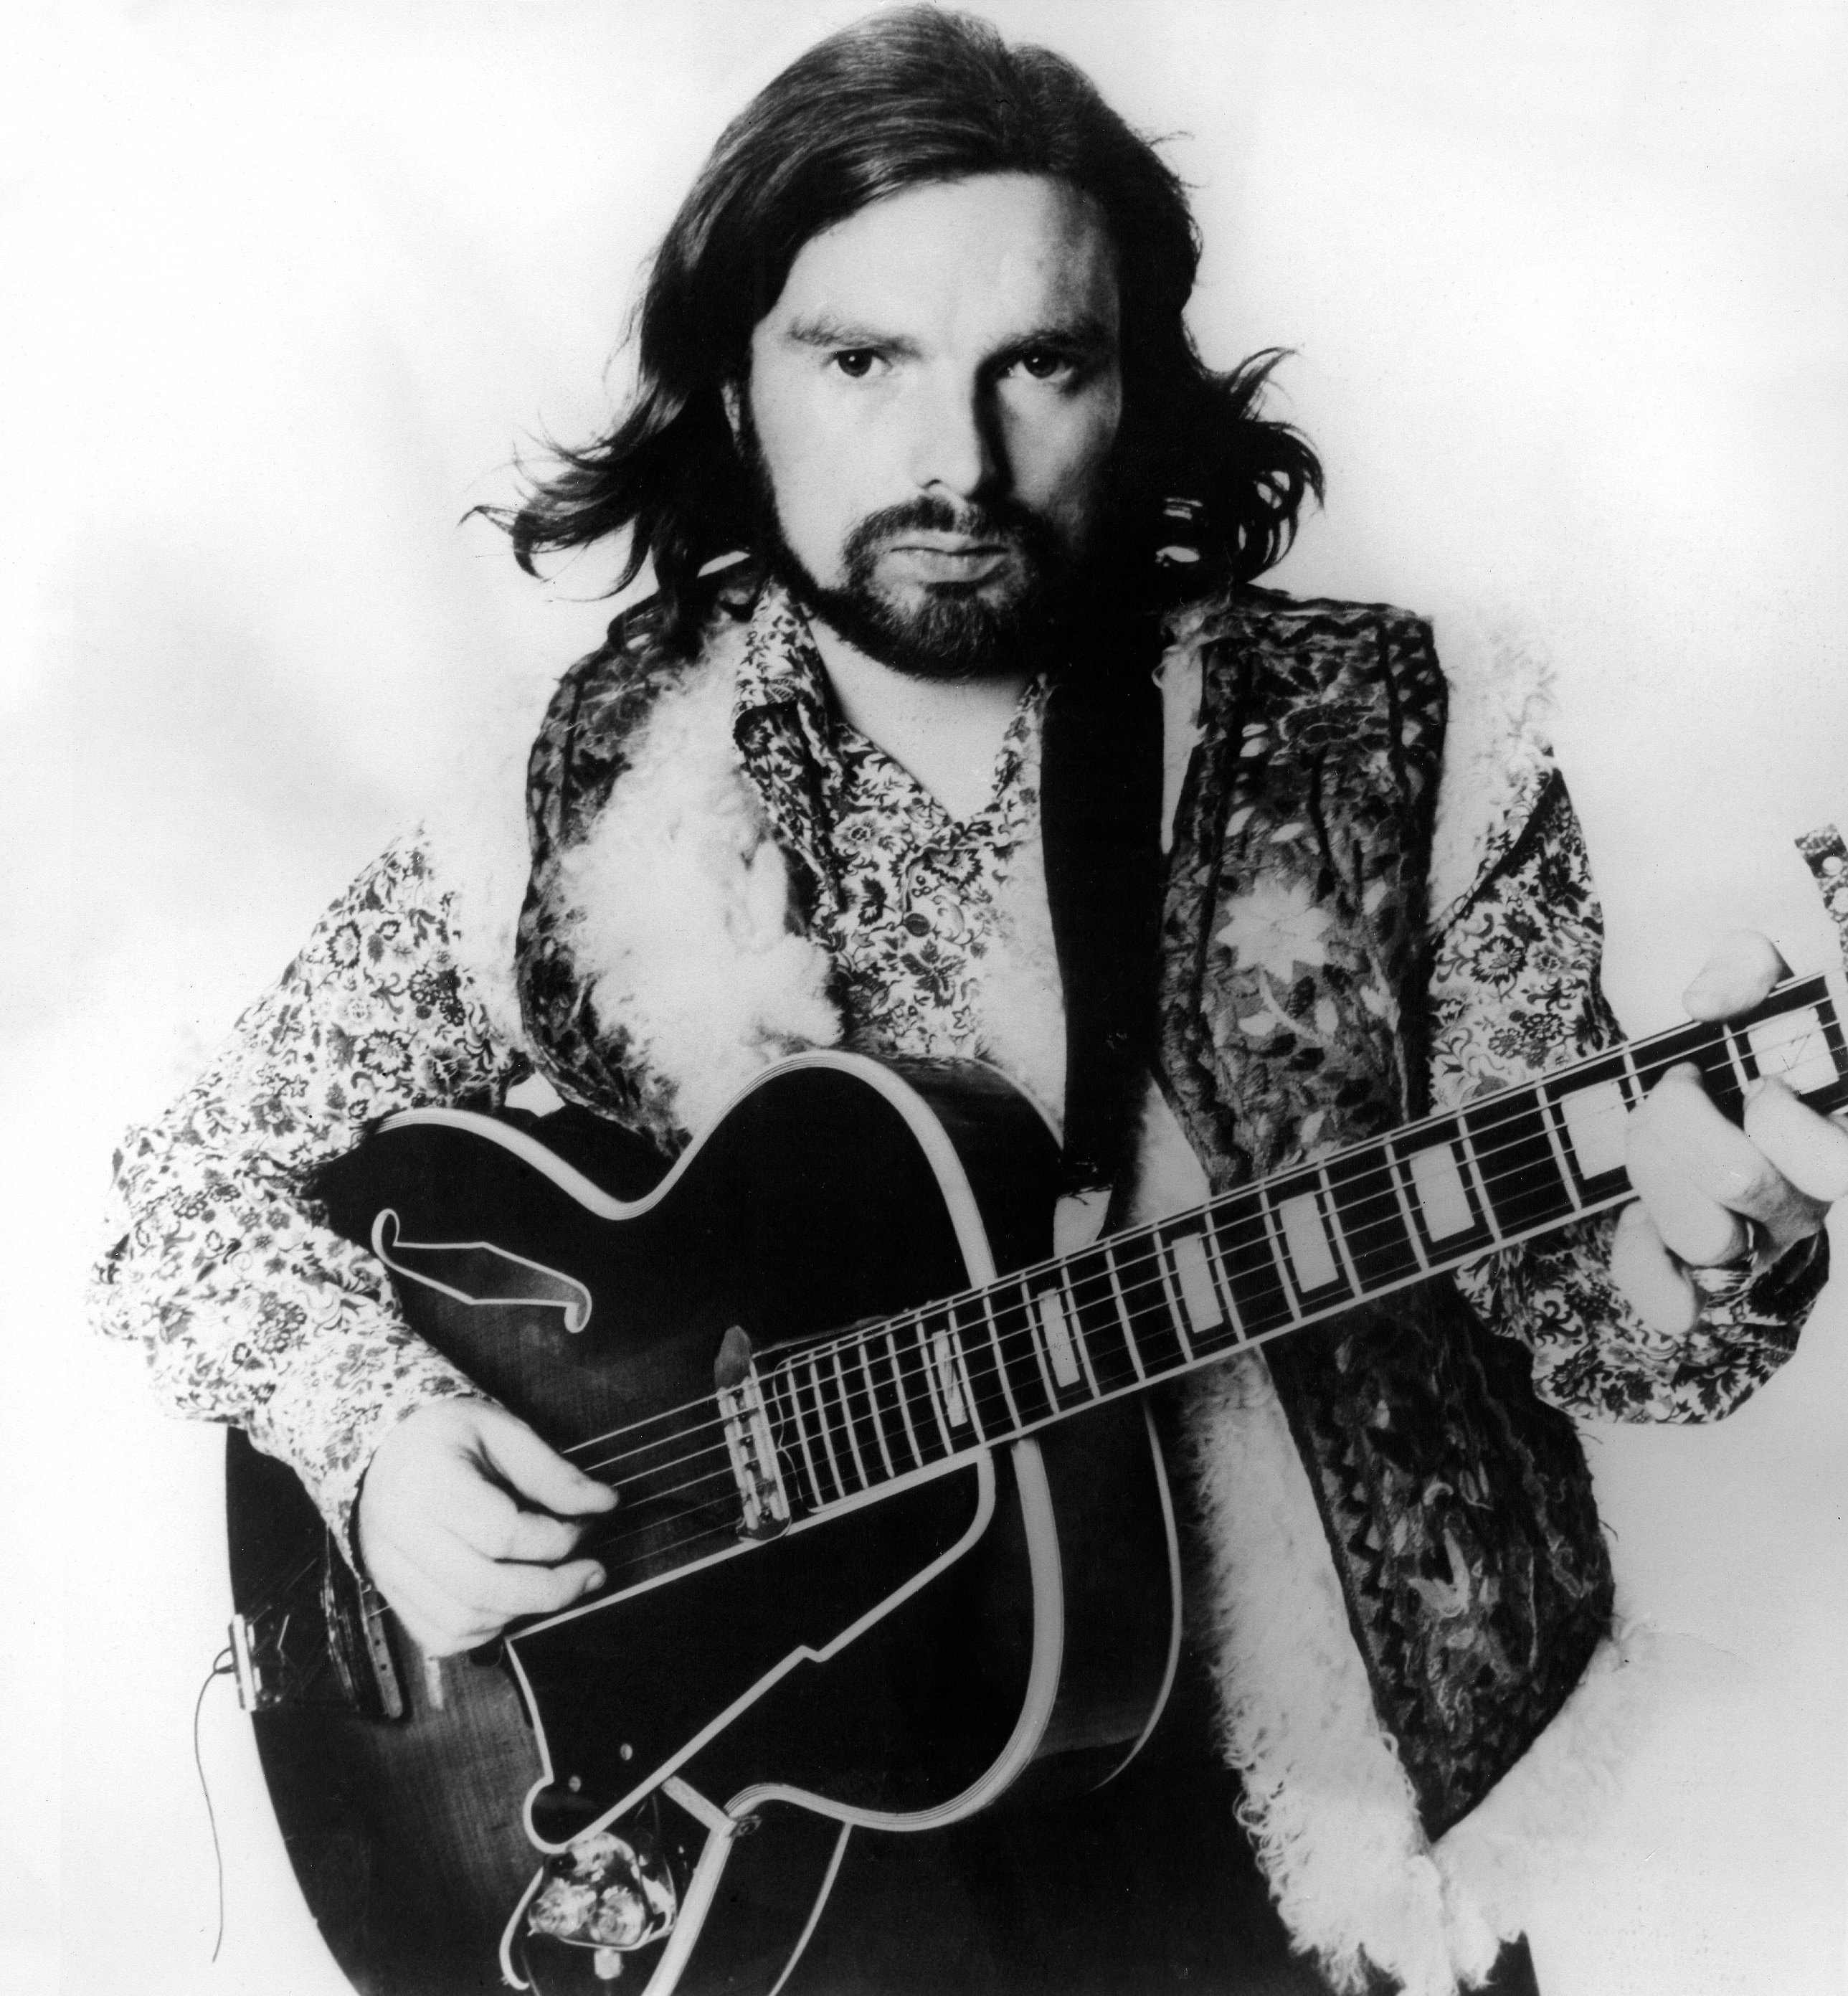 Van Morrison with a guitar